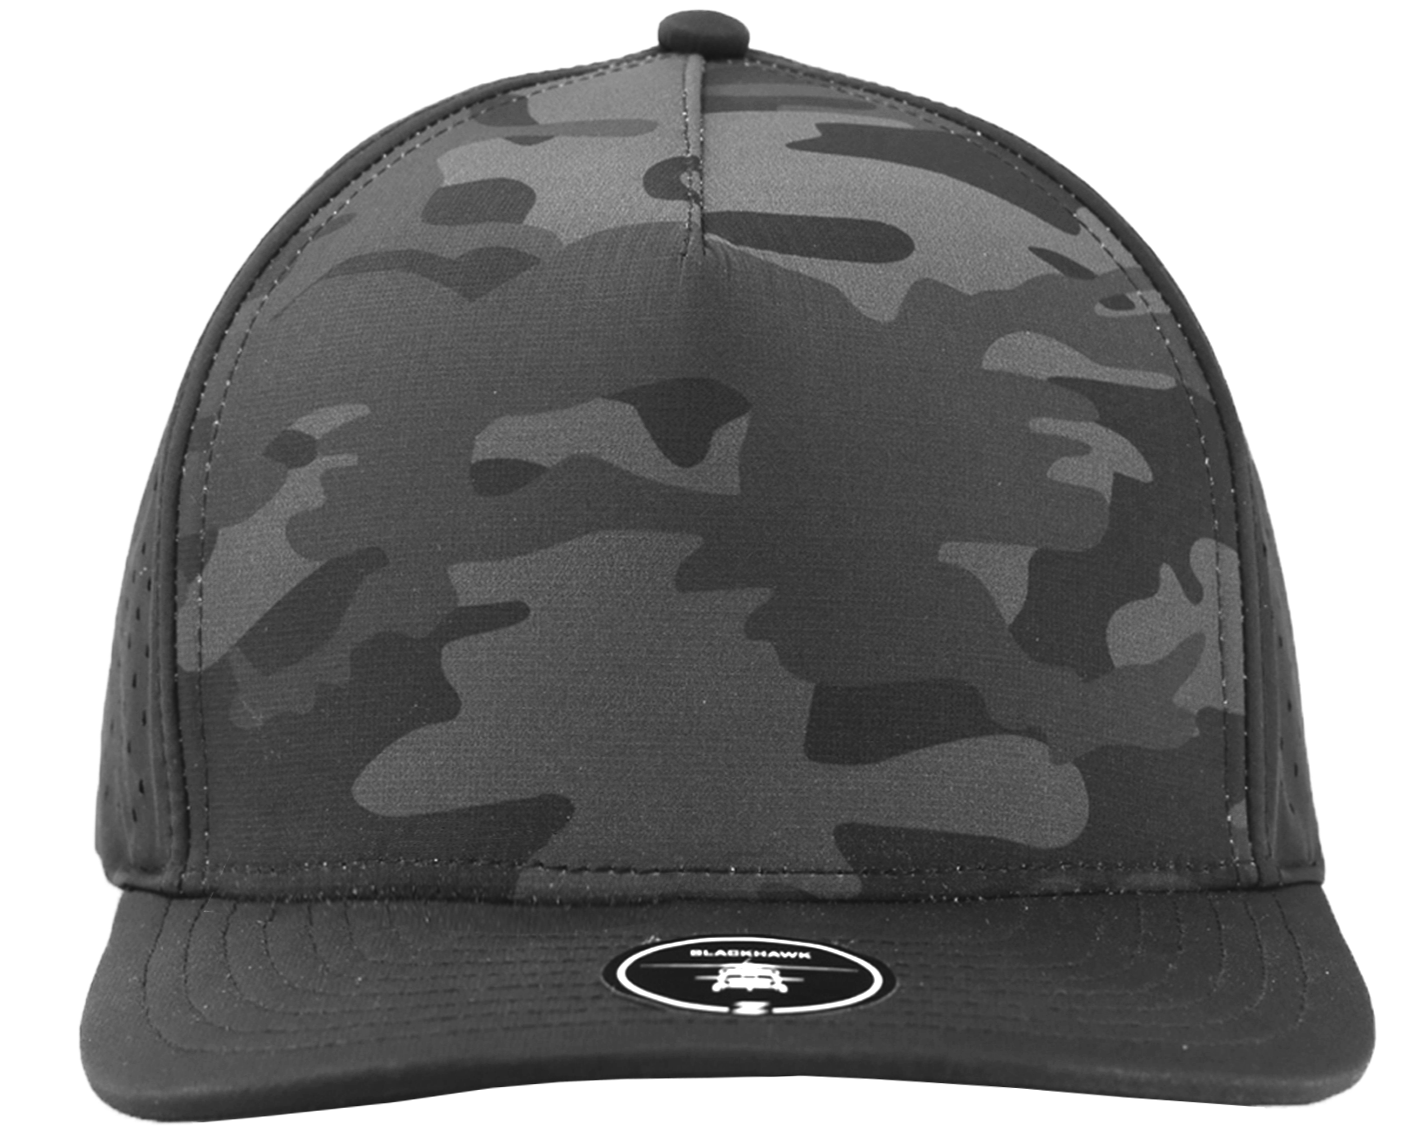 Black camo Custom Hat blackhawk 5 panel waterproof hat